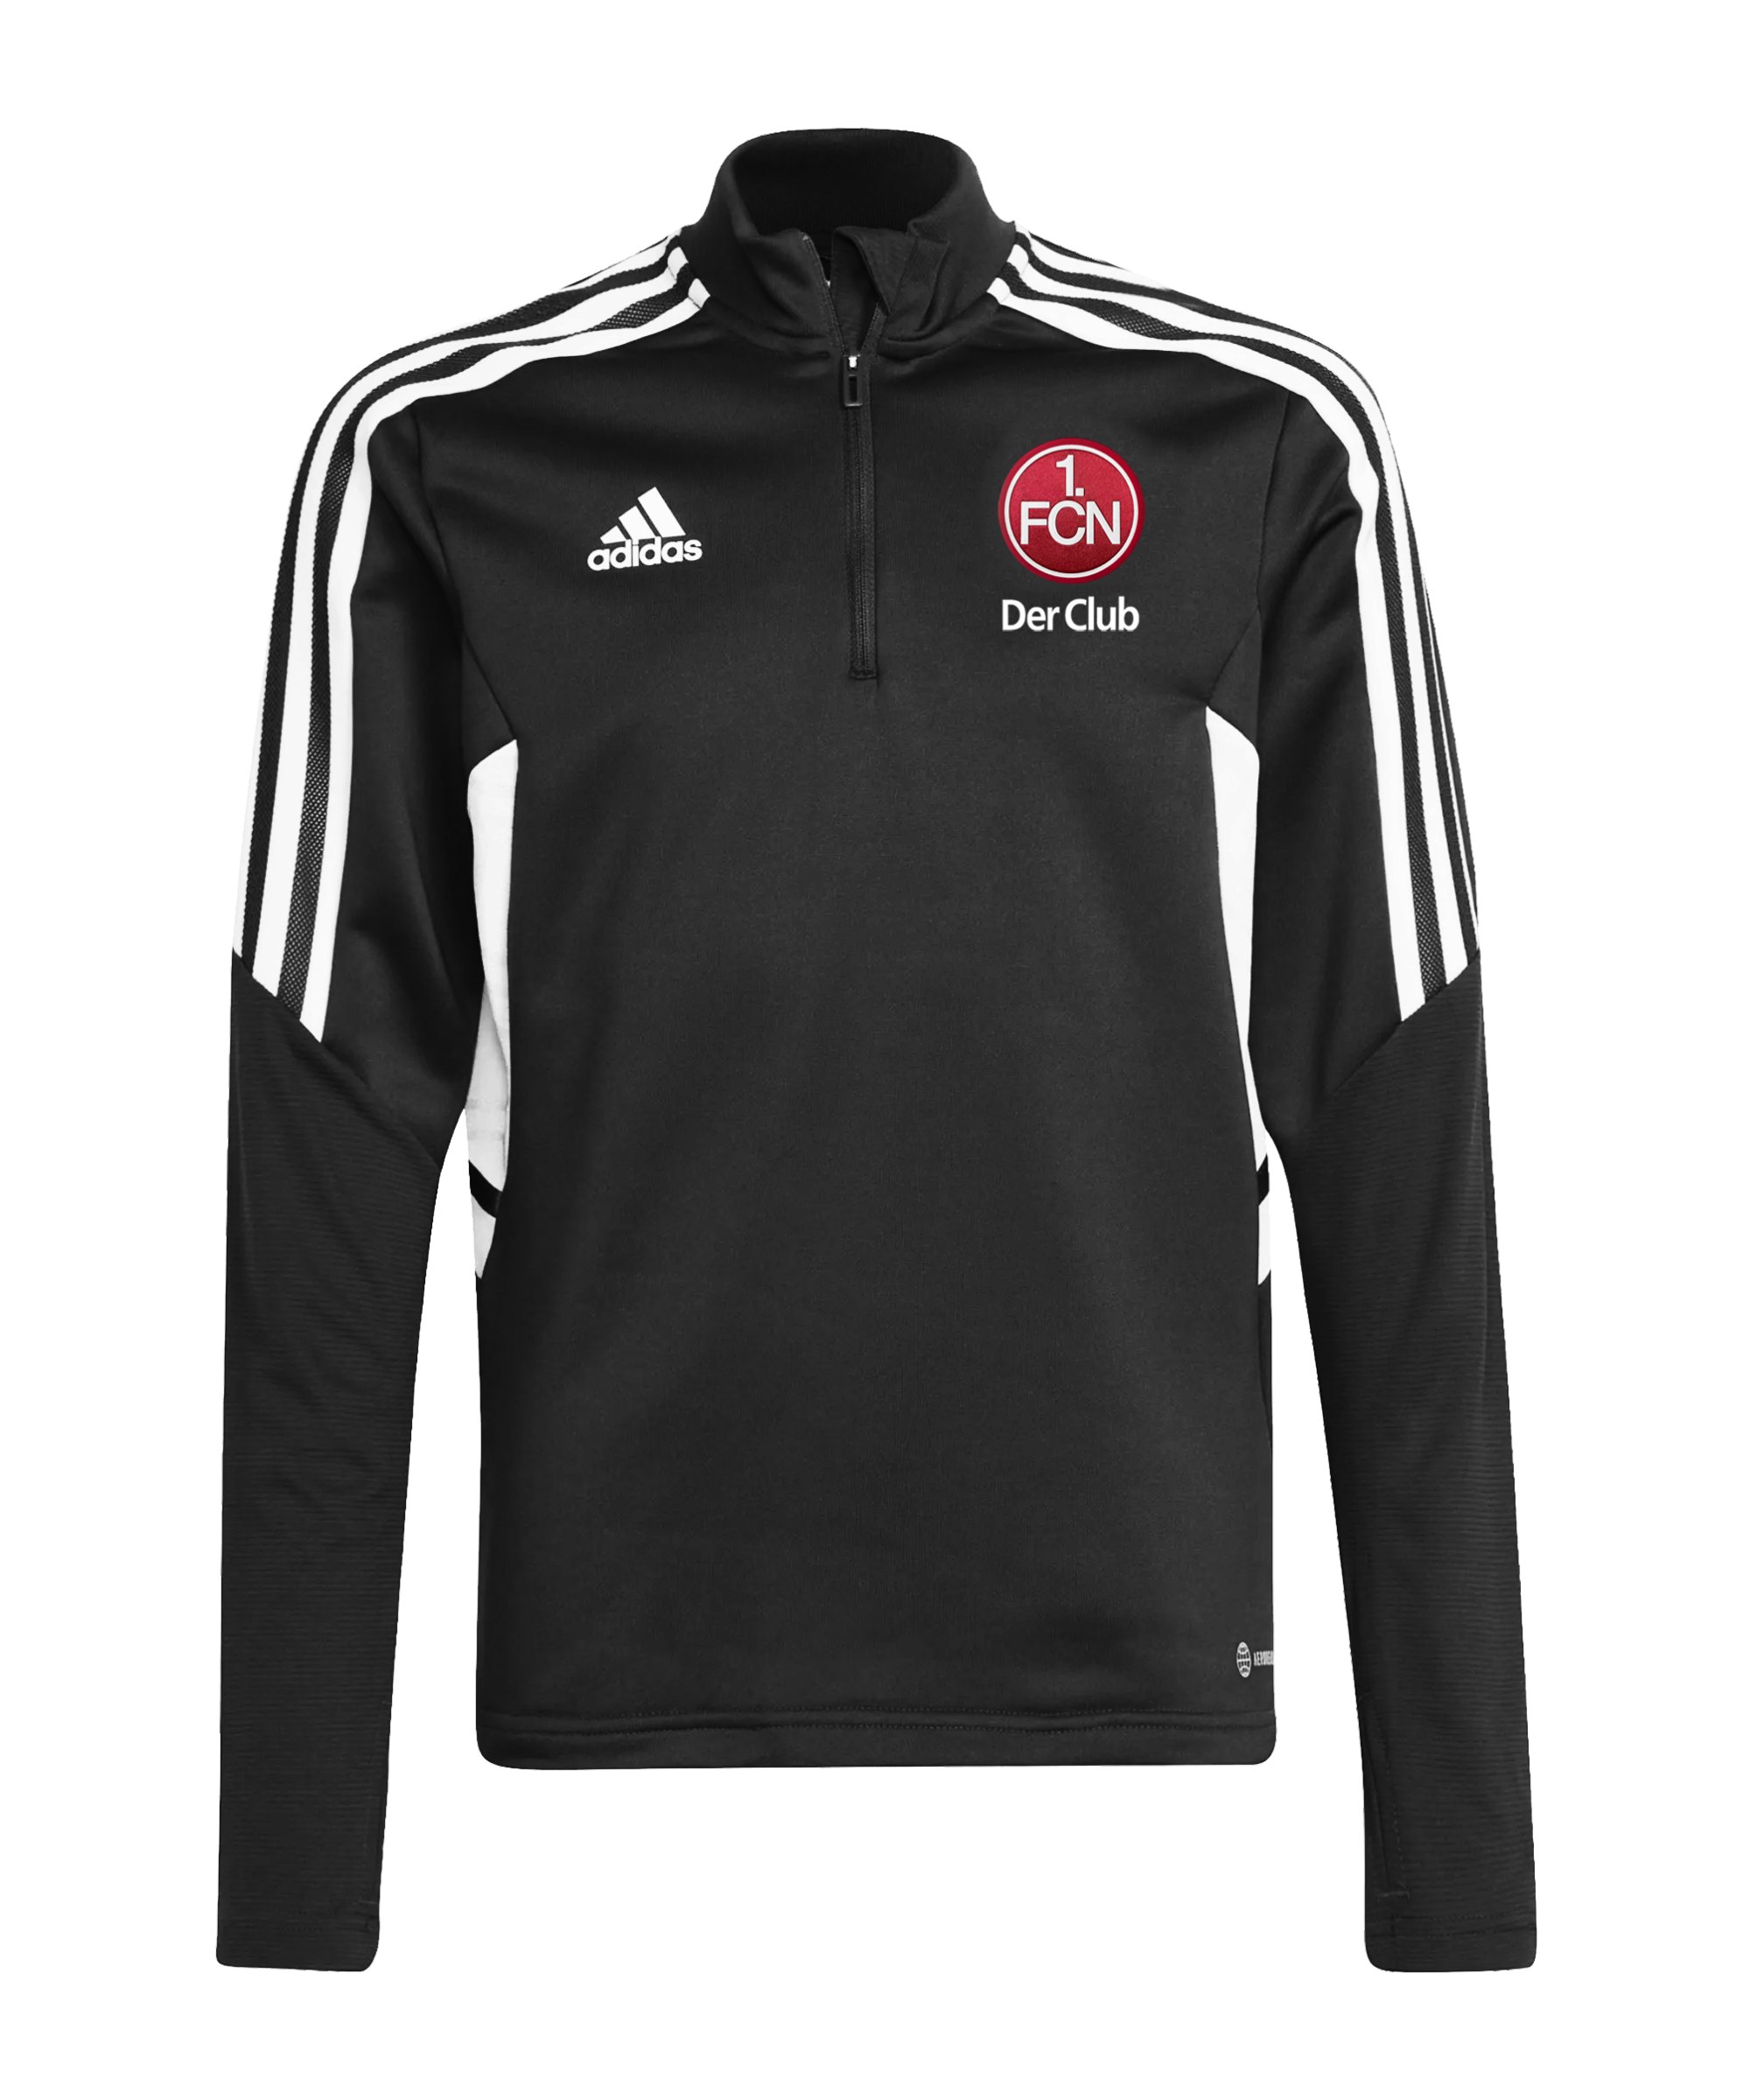 adidas 1. FC Nürnberg HalfZip Sweatshirt Schwarz - schwarz